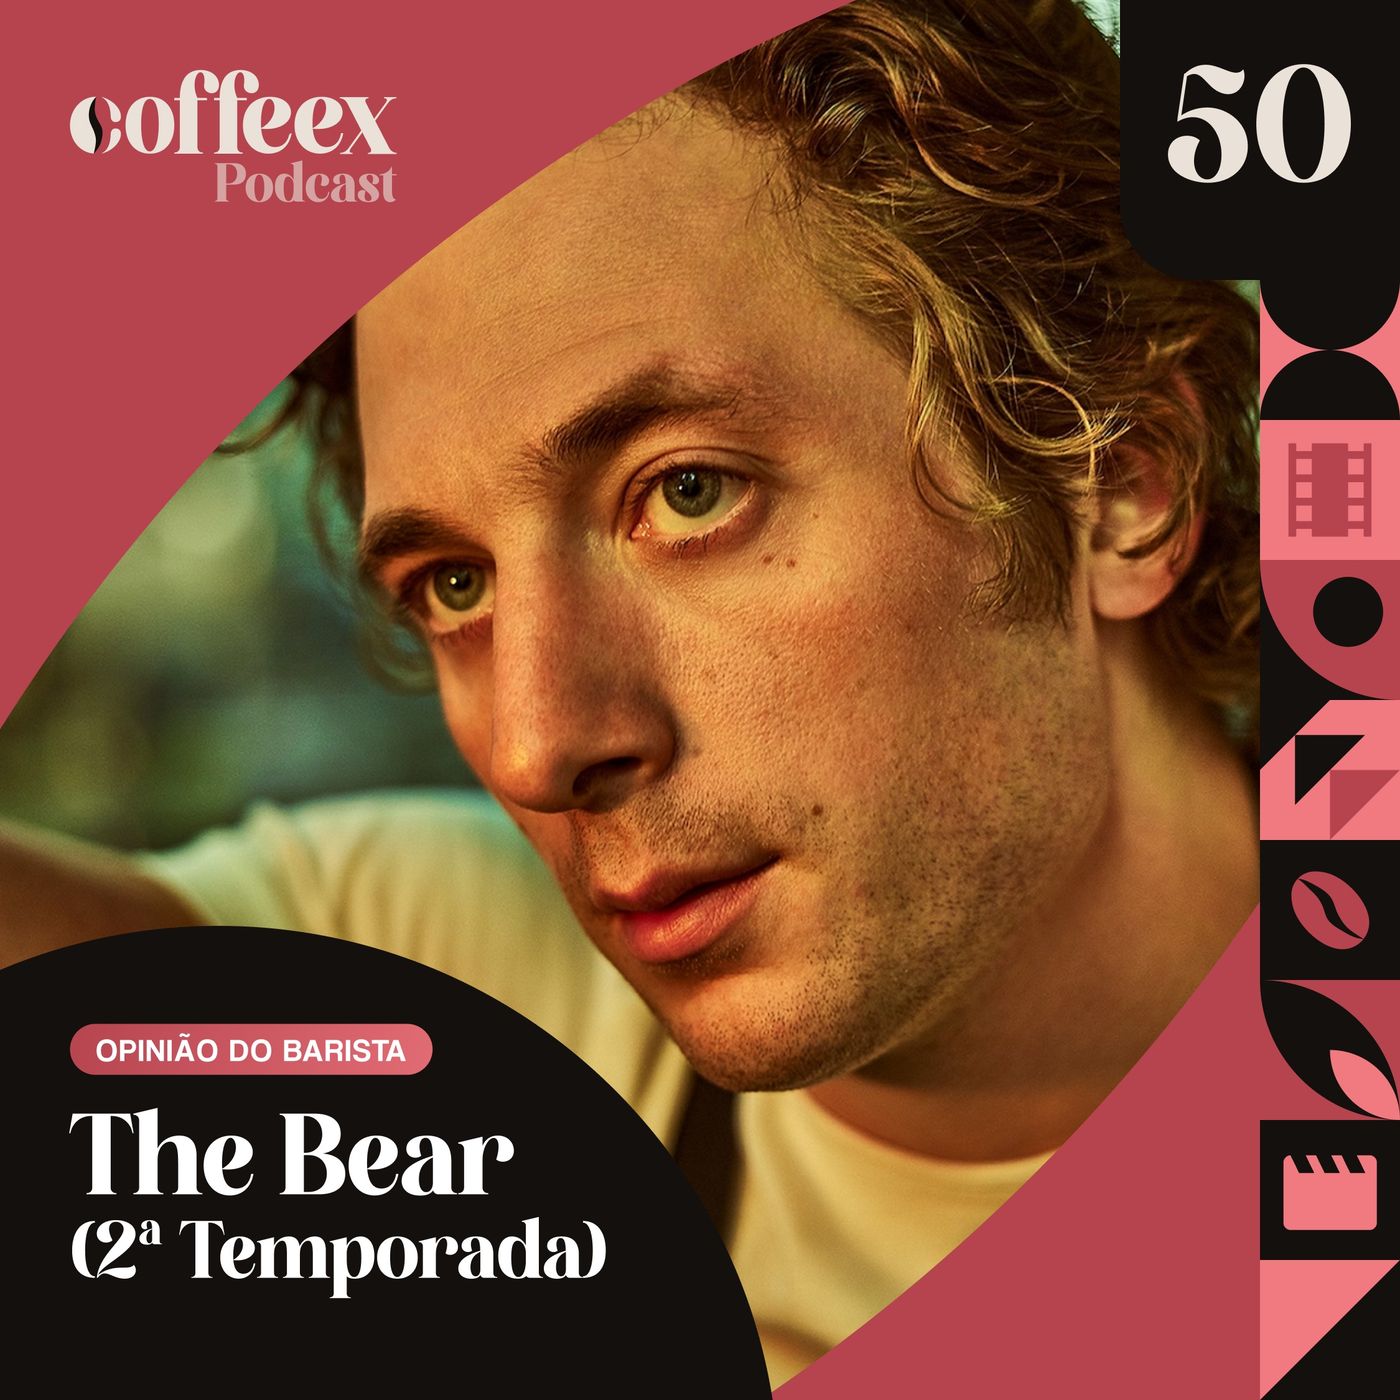 The Bear (2ª Temporada) | Opinião do Barista #50 (part. Adriano Toledo)